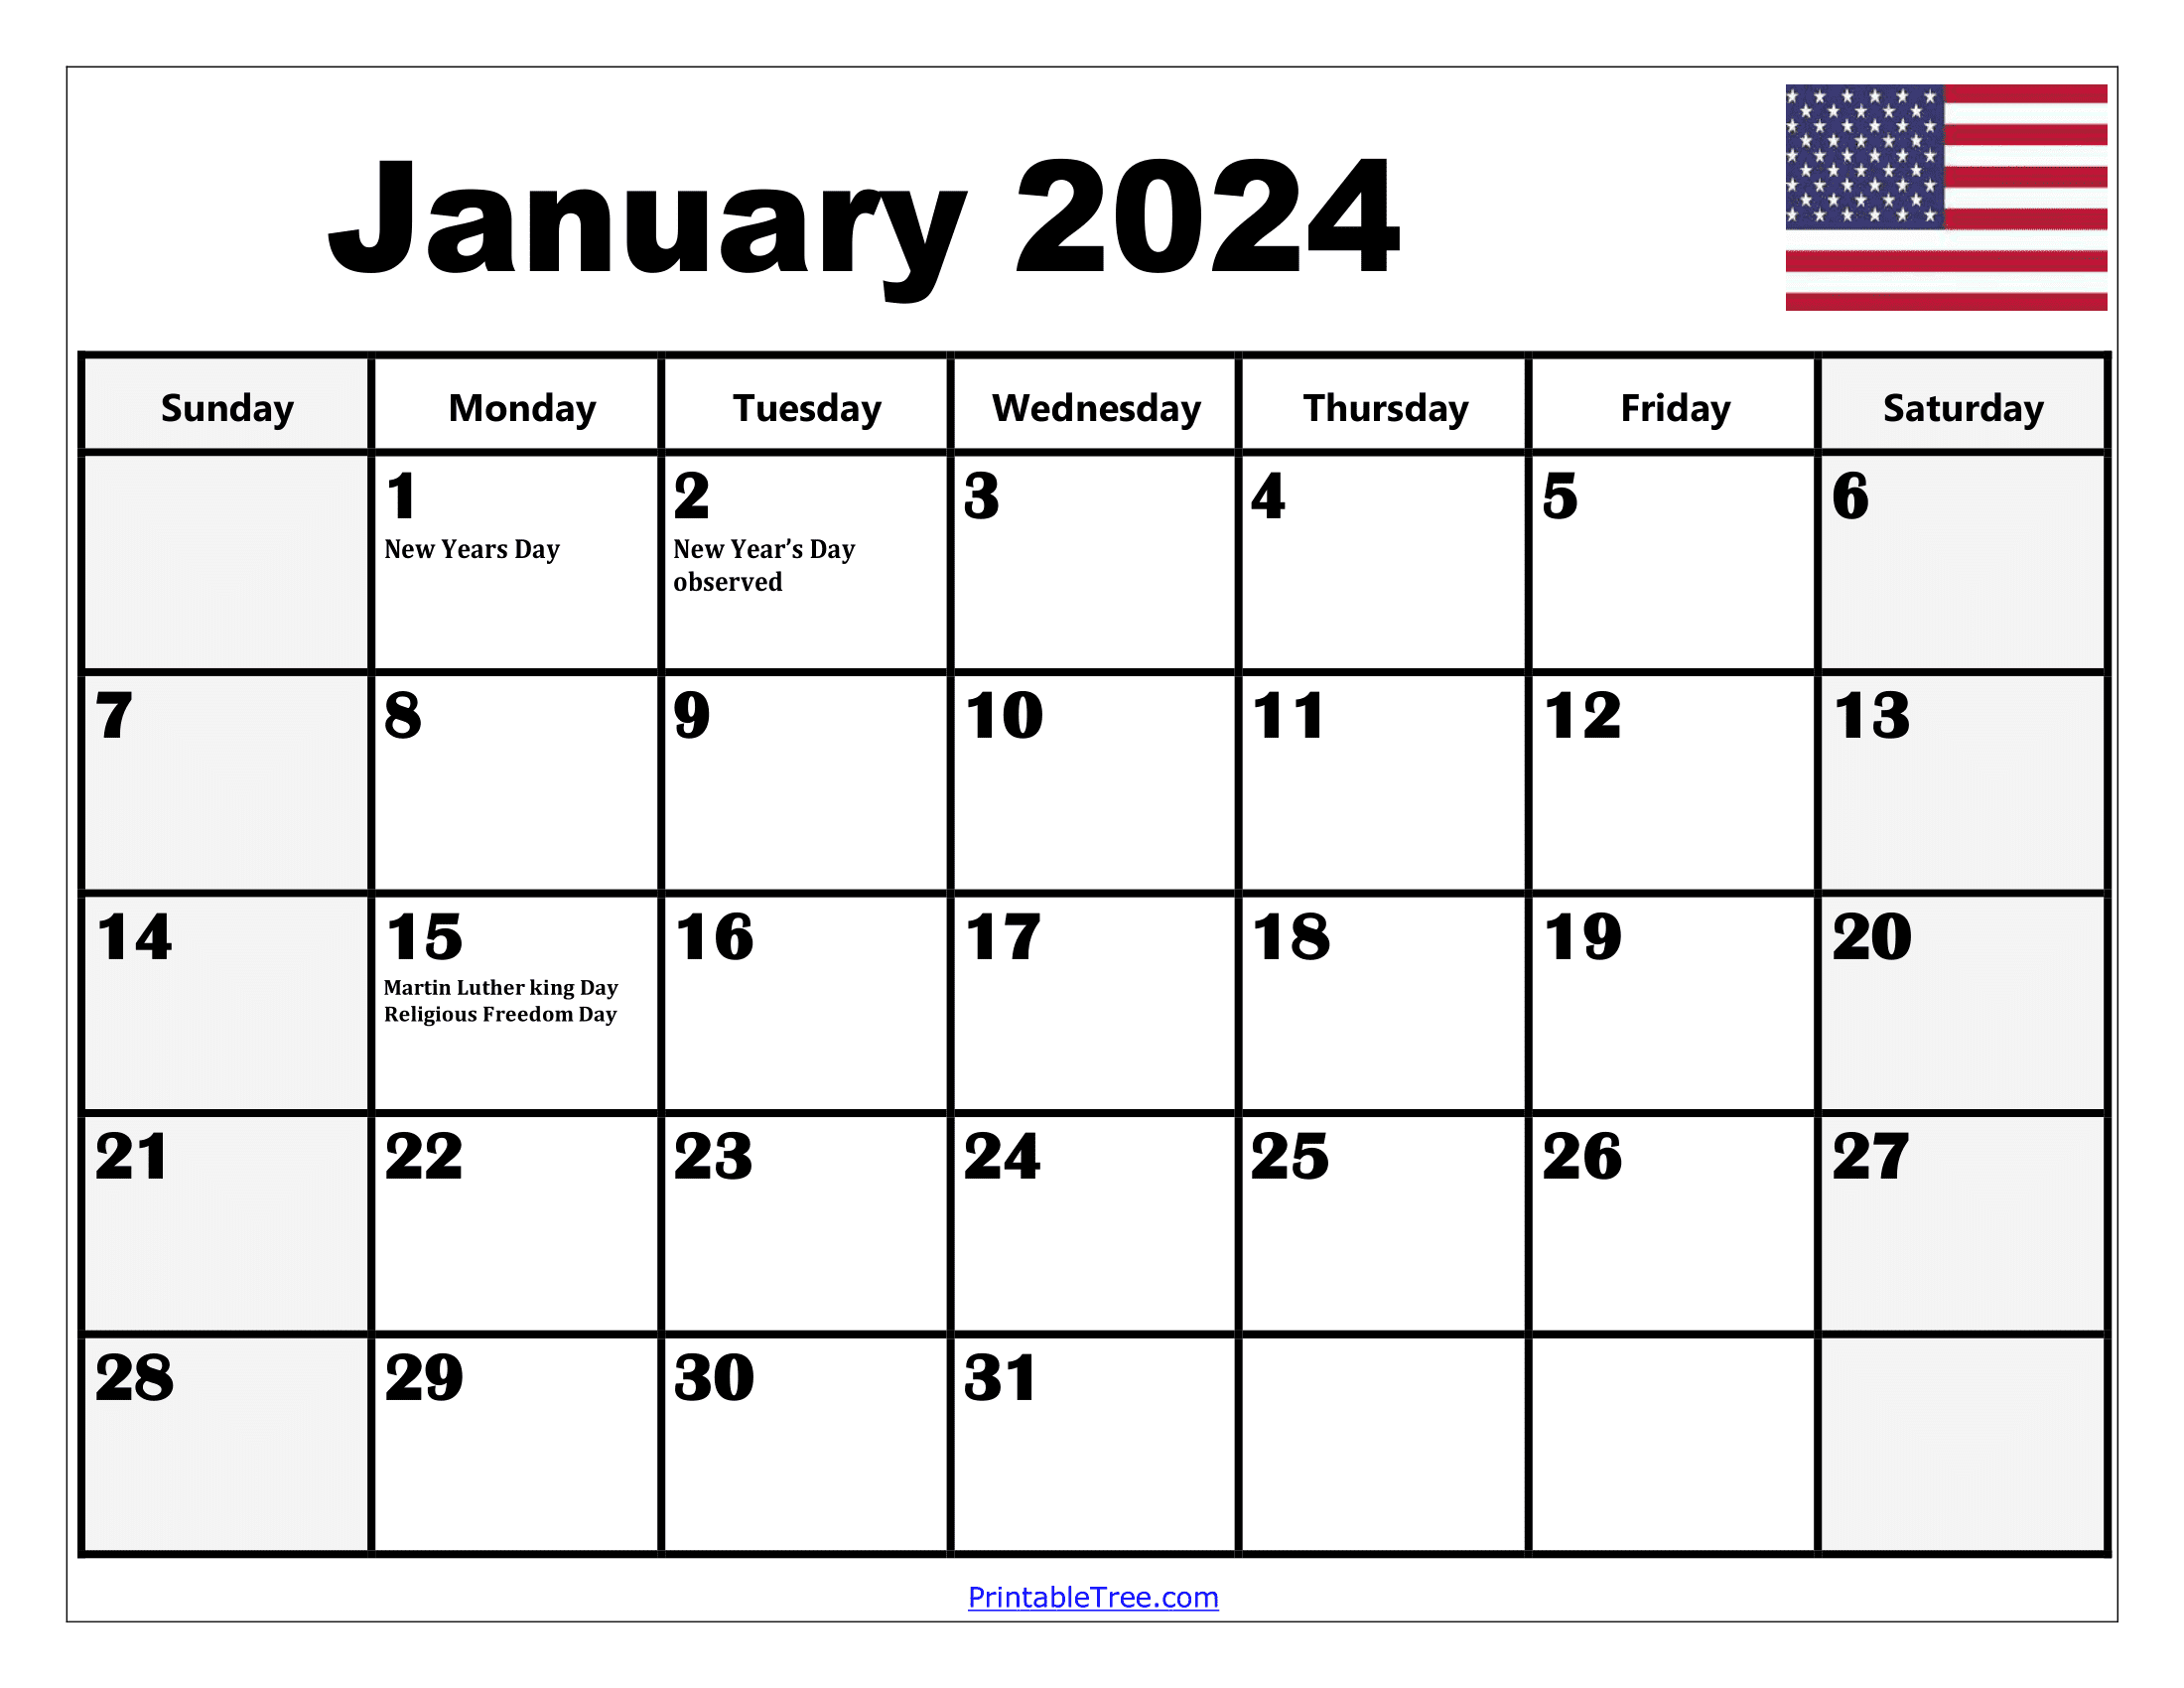 January 2024 Calendar Printable Pdf Template With Holidays for January 2024 Calendar With Holidays Printable